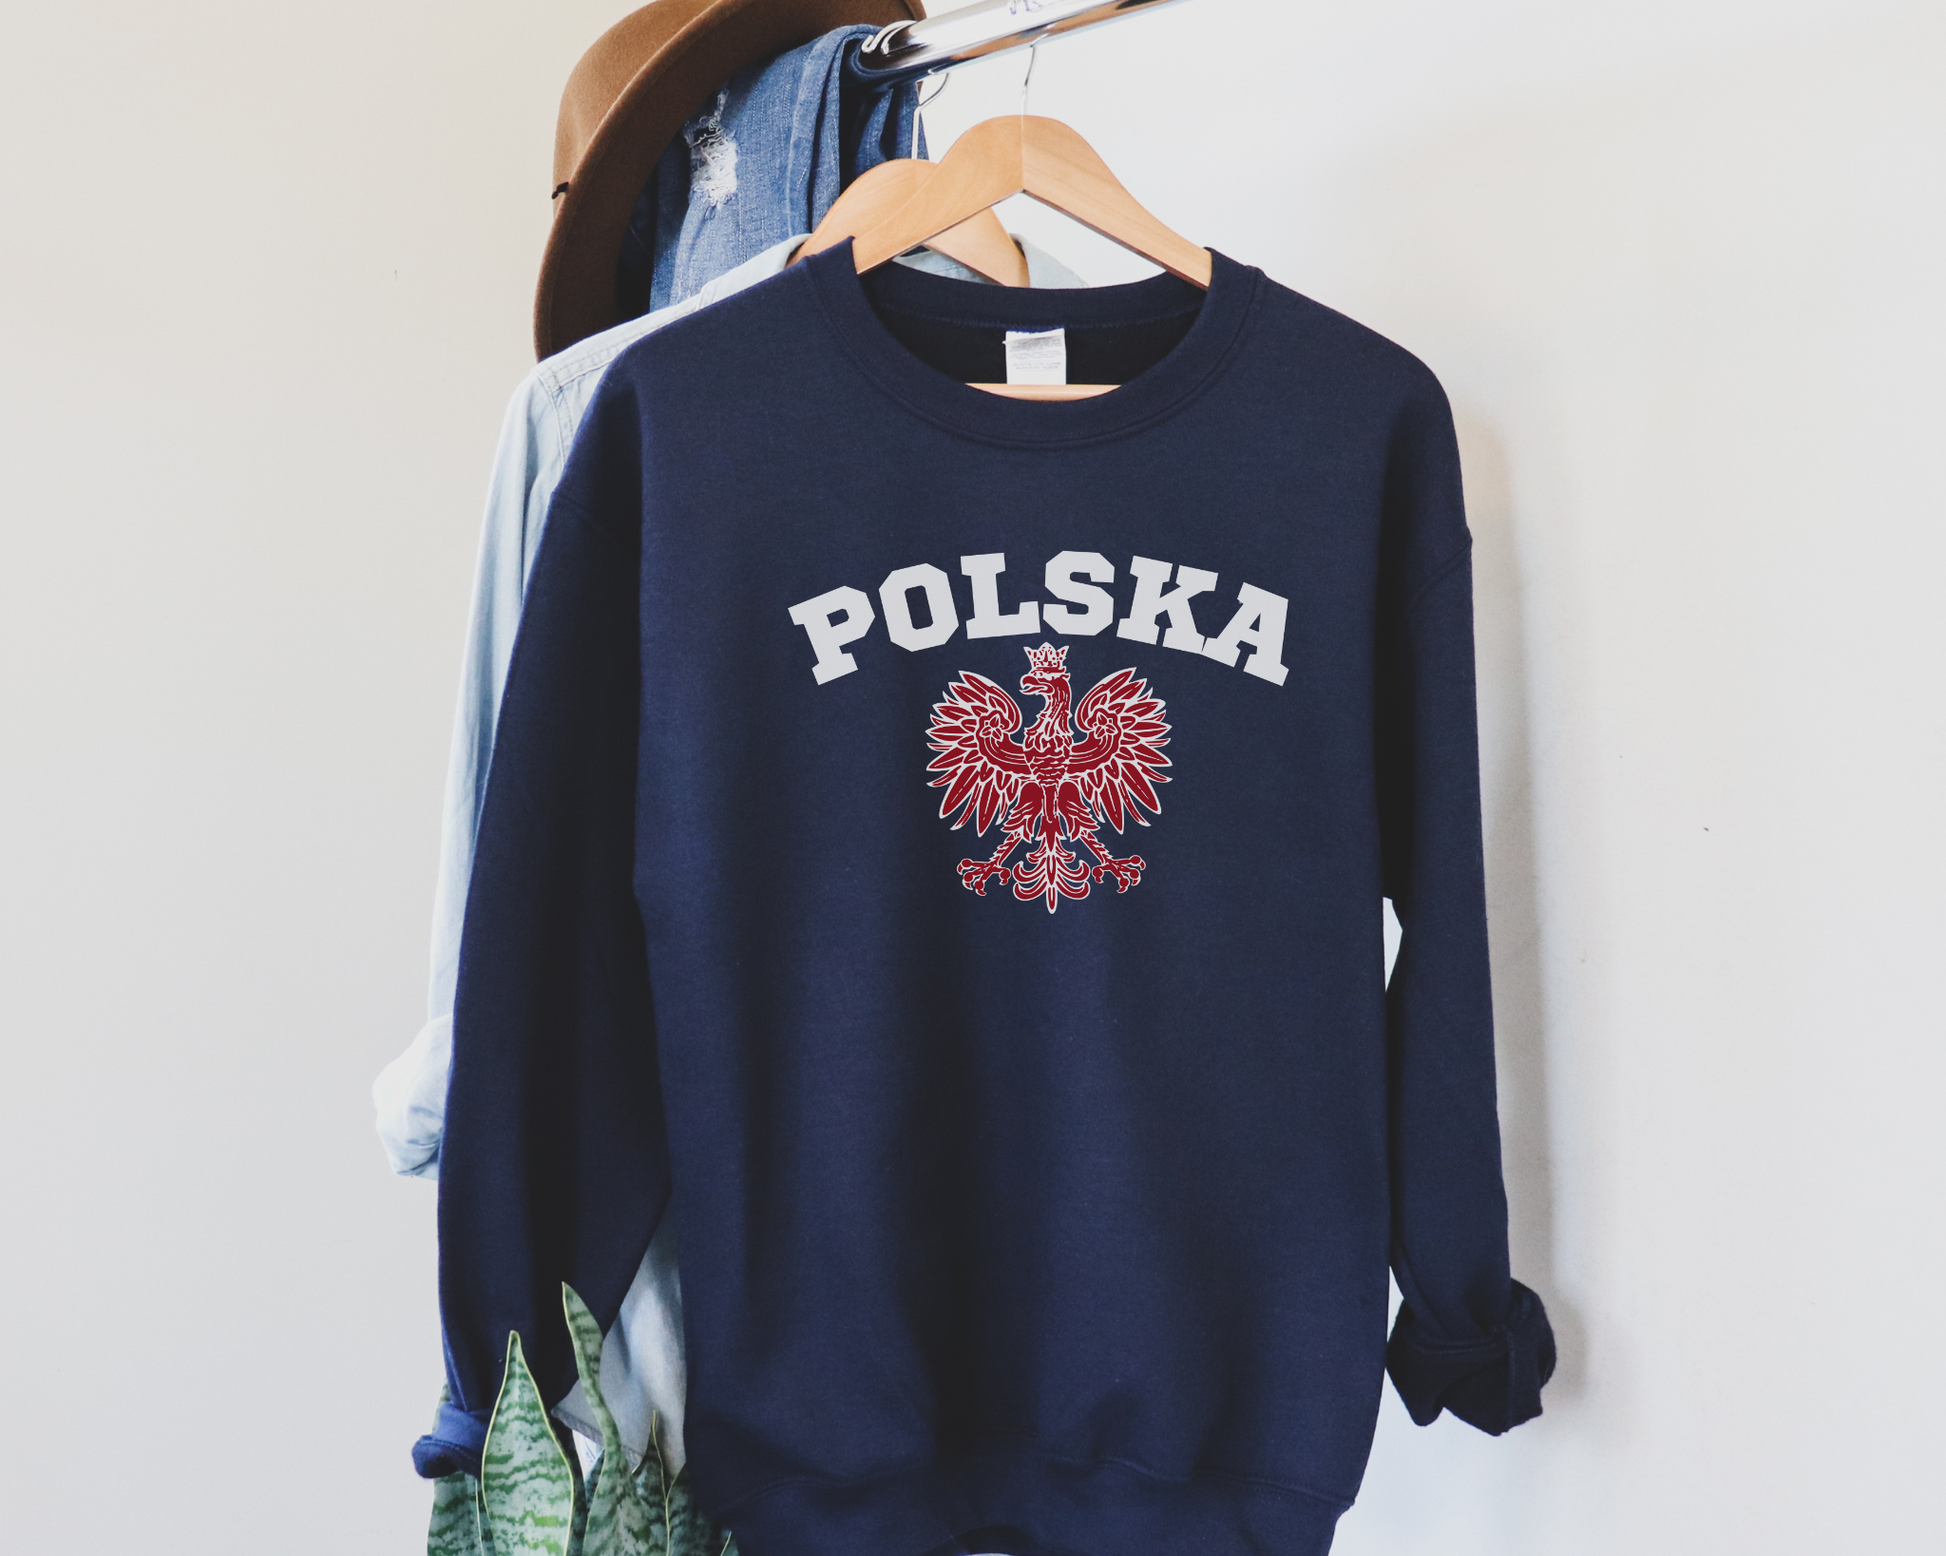 Polska Polish Sweatshirt in Navy, hanging.